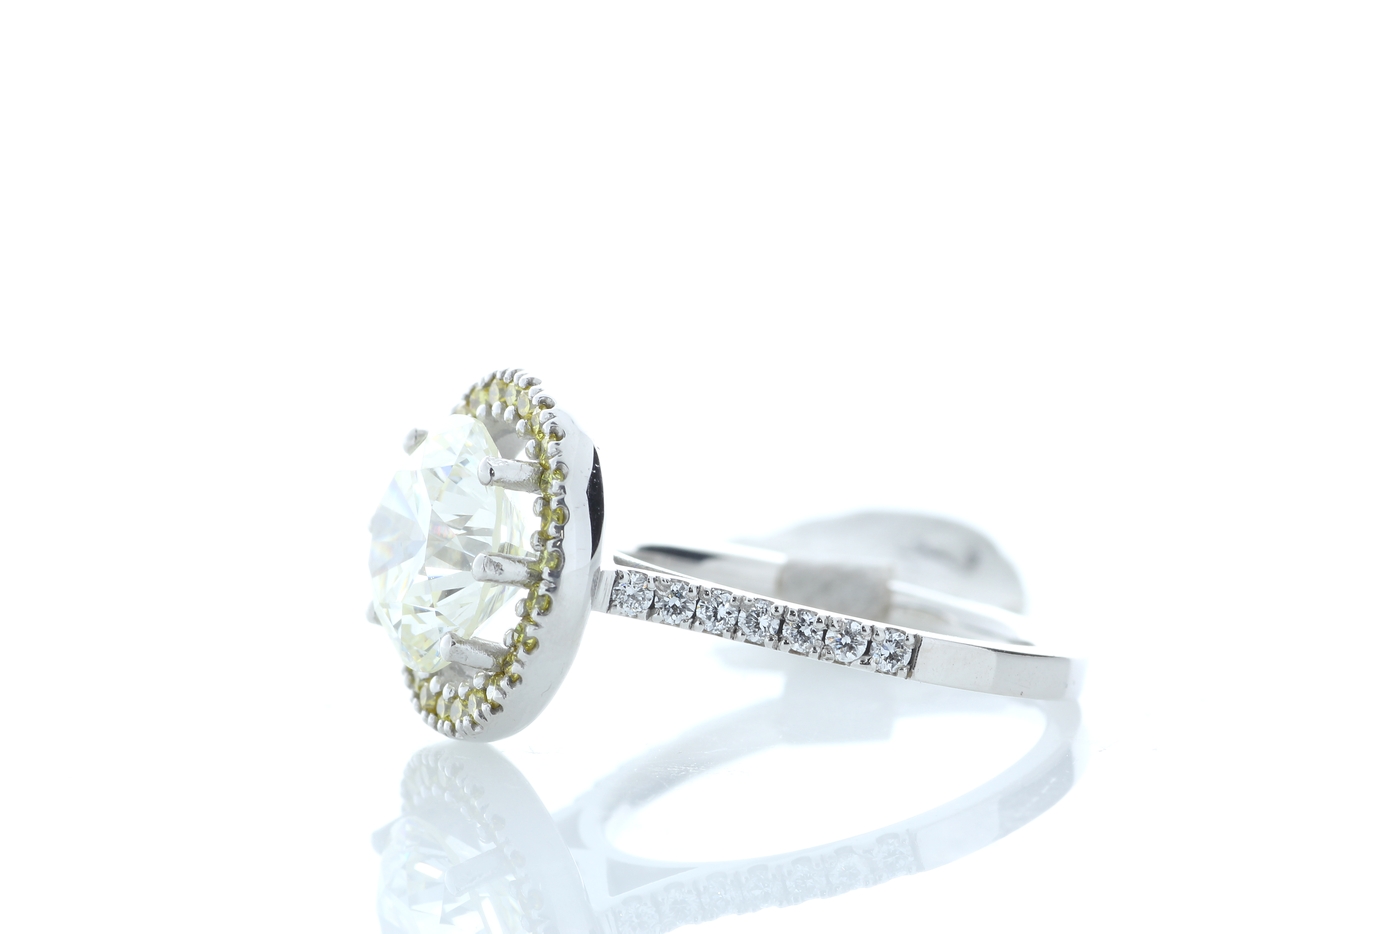 18ct White Gold Halo Set Diamond Ring 3.43 Carats - Image 2 of 5